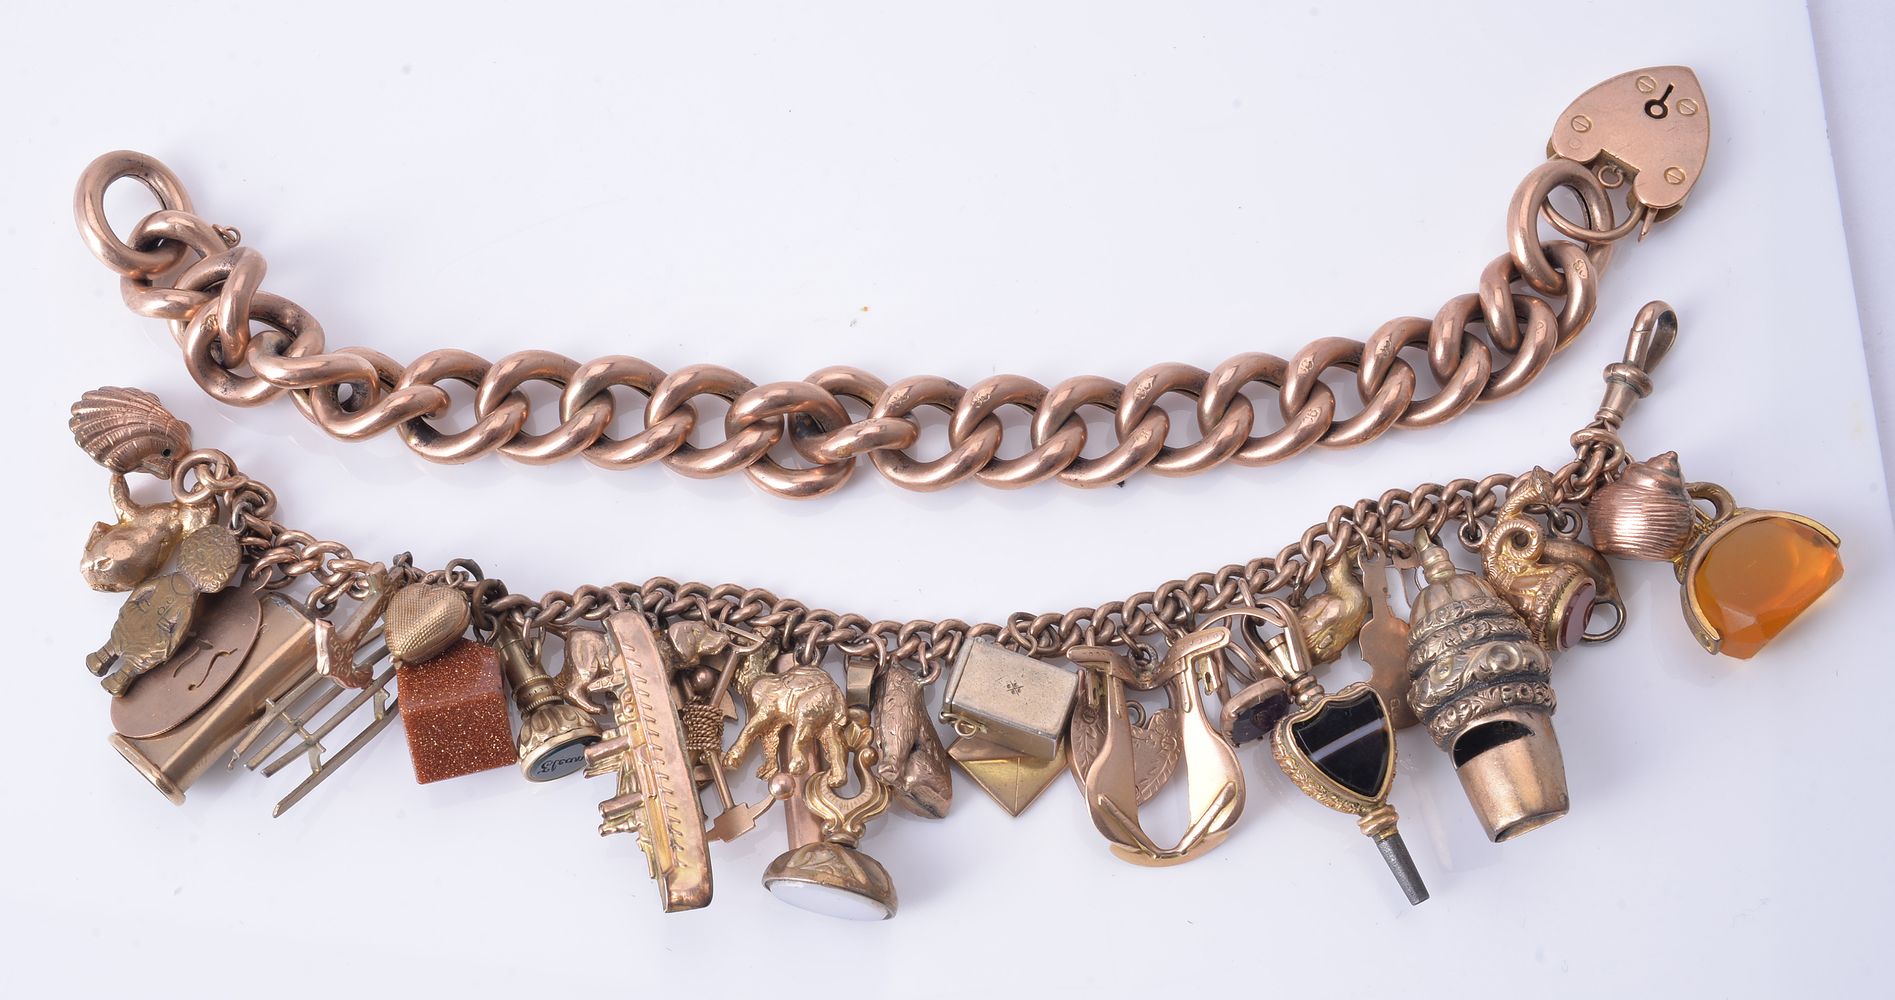 A curb link bracelet